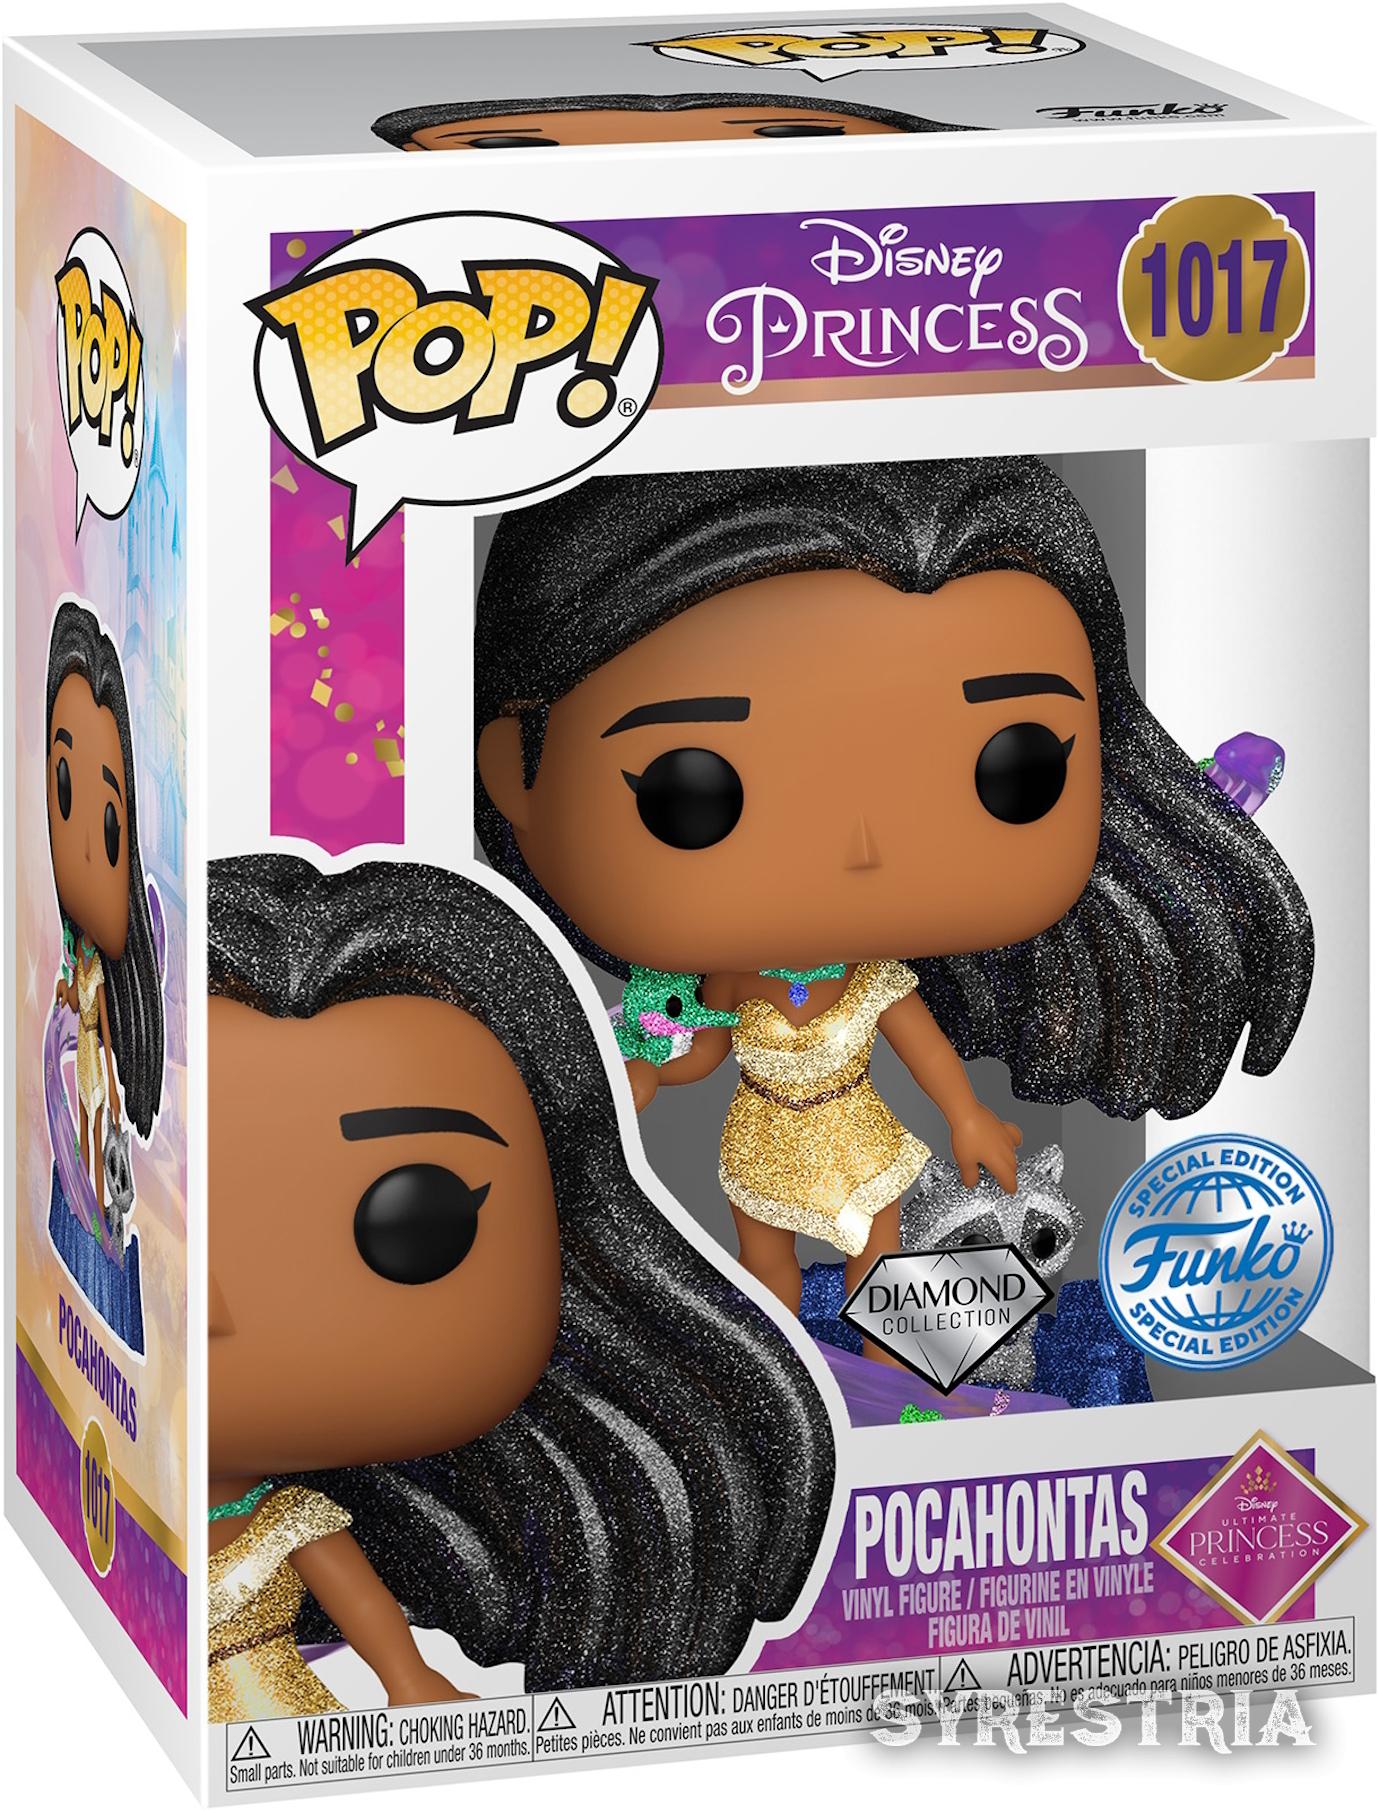 Disney Princess - Pocahontas 1017   Diamond Special Edition - Funko Pop! Vinyl Figur